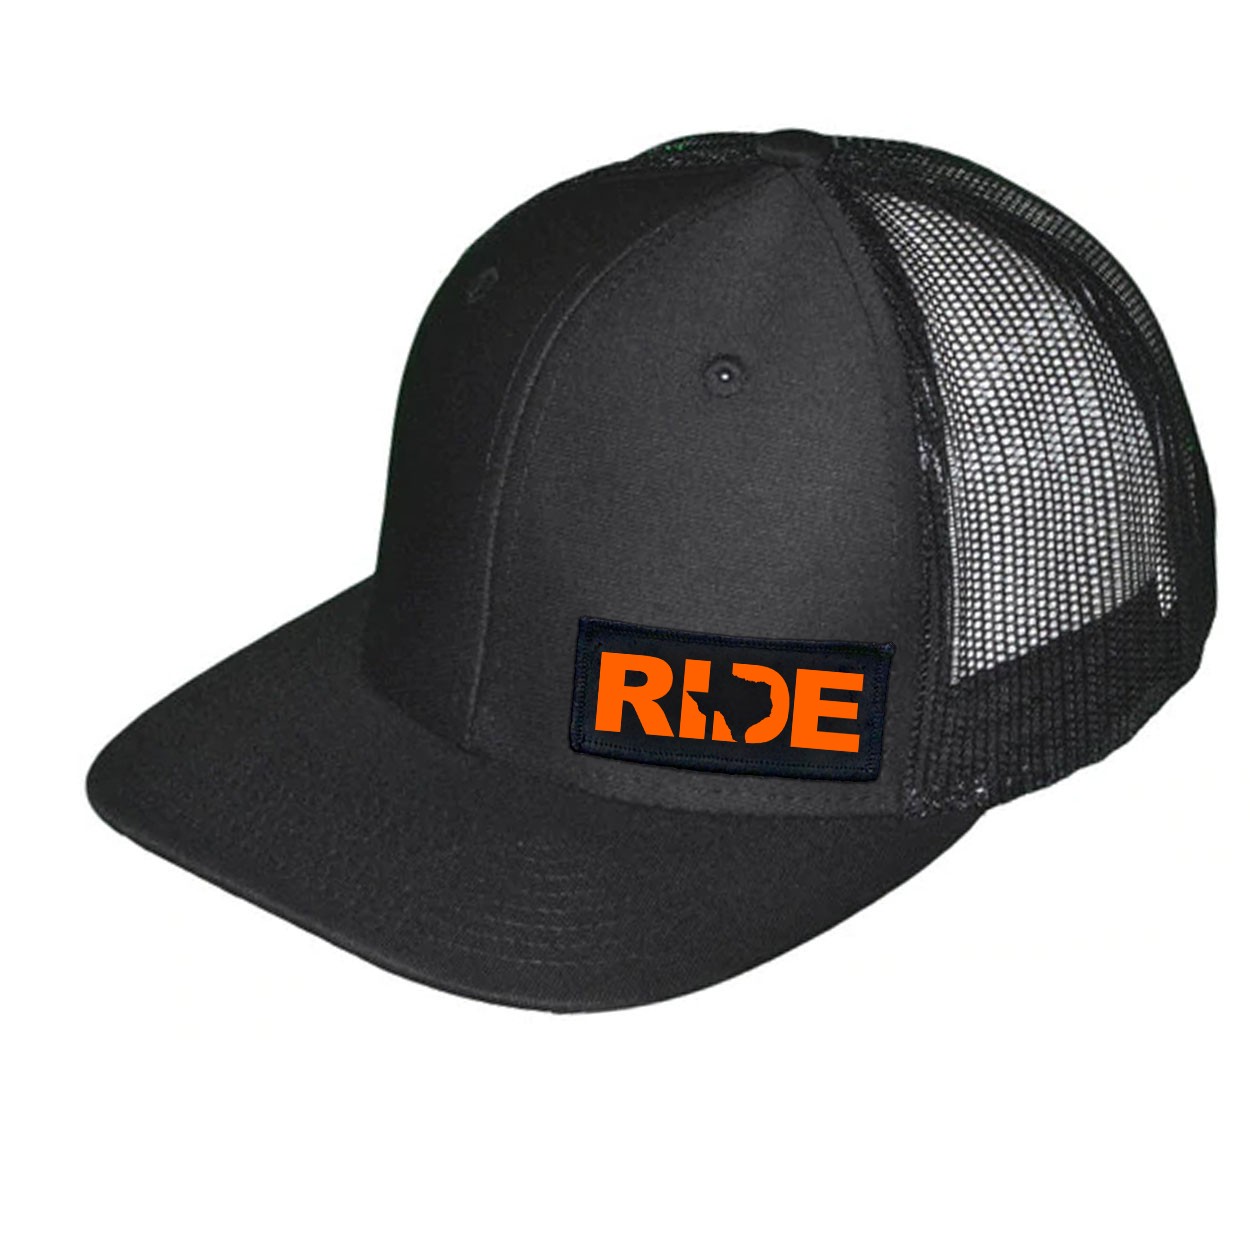 Ride Texas Night Out Woven Patch Snapback Trucker Hat Black (Orange Logo)